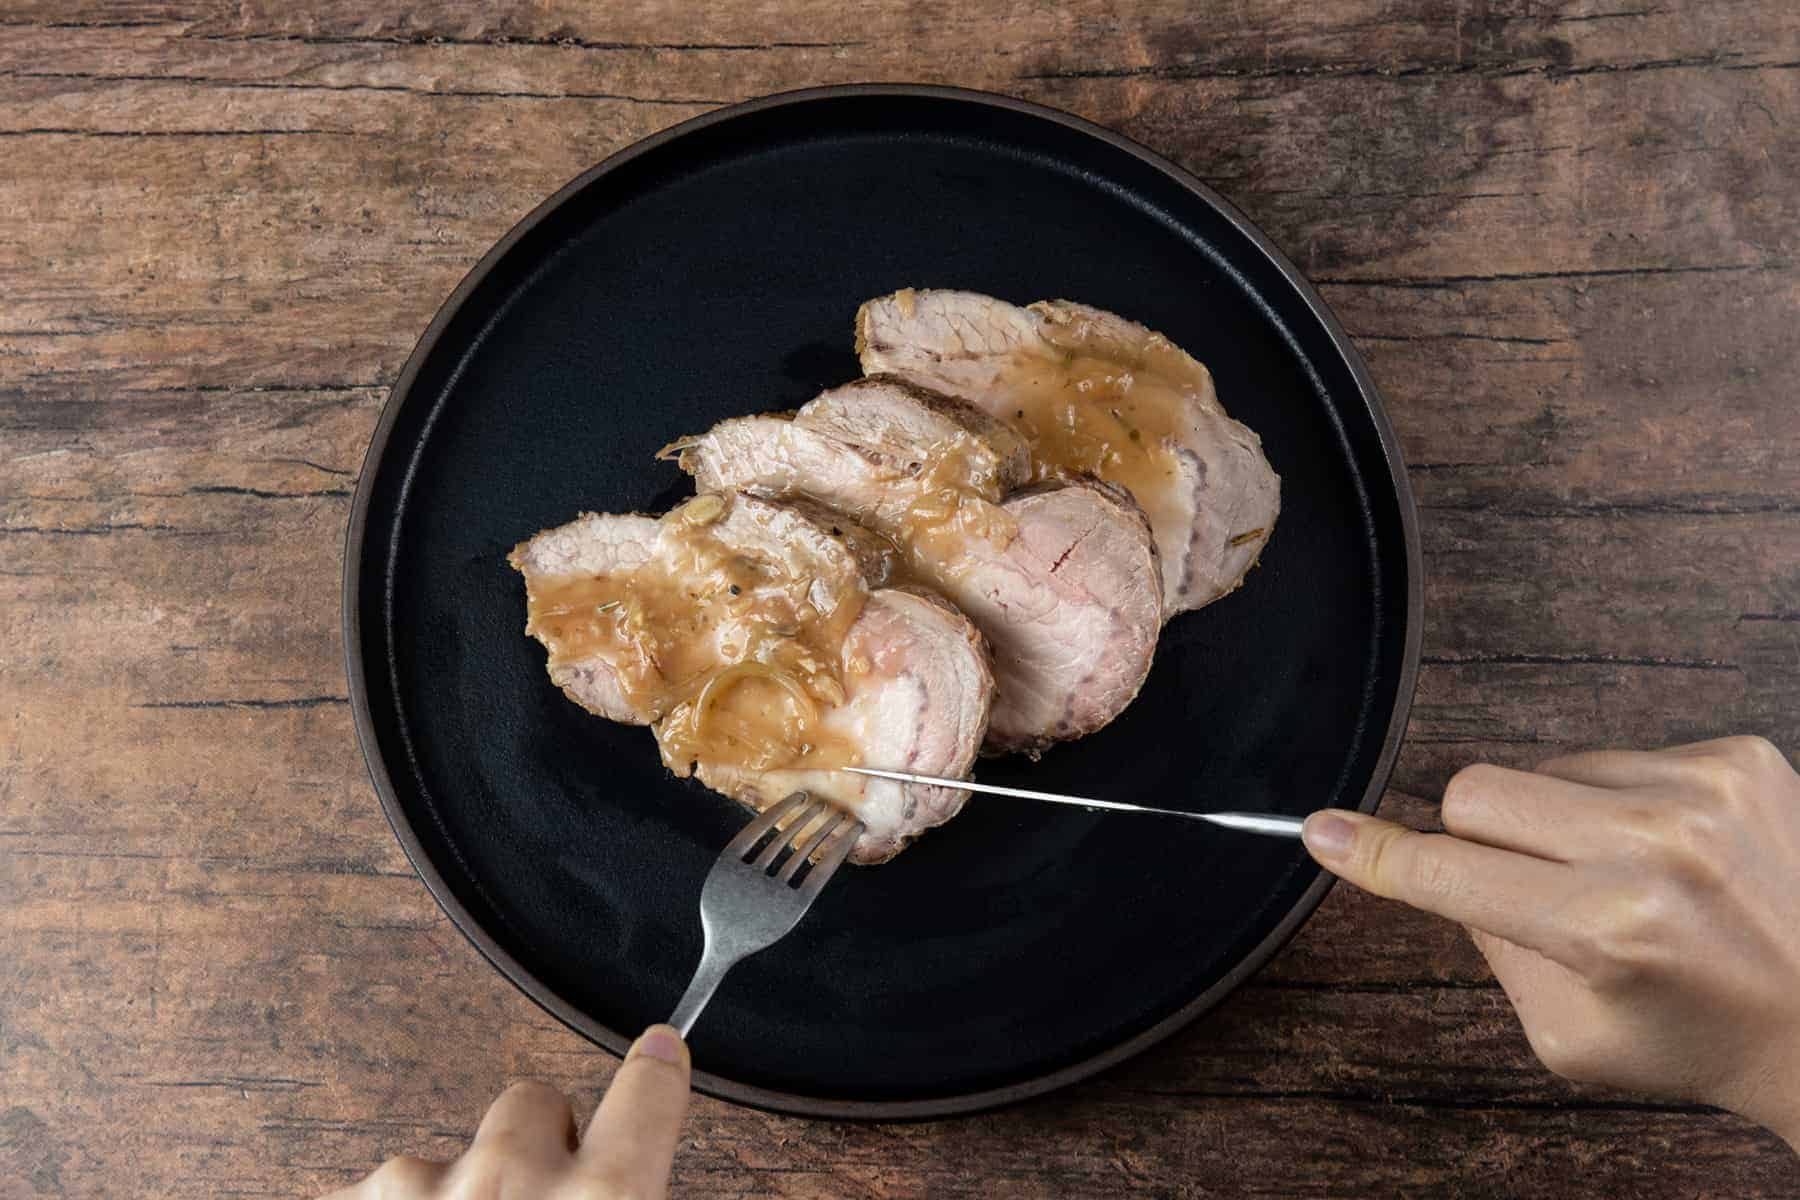 instant pot pork loin | pork loin recipe | pressure cooker pork loin | instant pot pork loin with gravy | instant pot pork loin roast recipe #AmyJacky #InstantPot #PressureCooker #pork #recipe